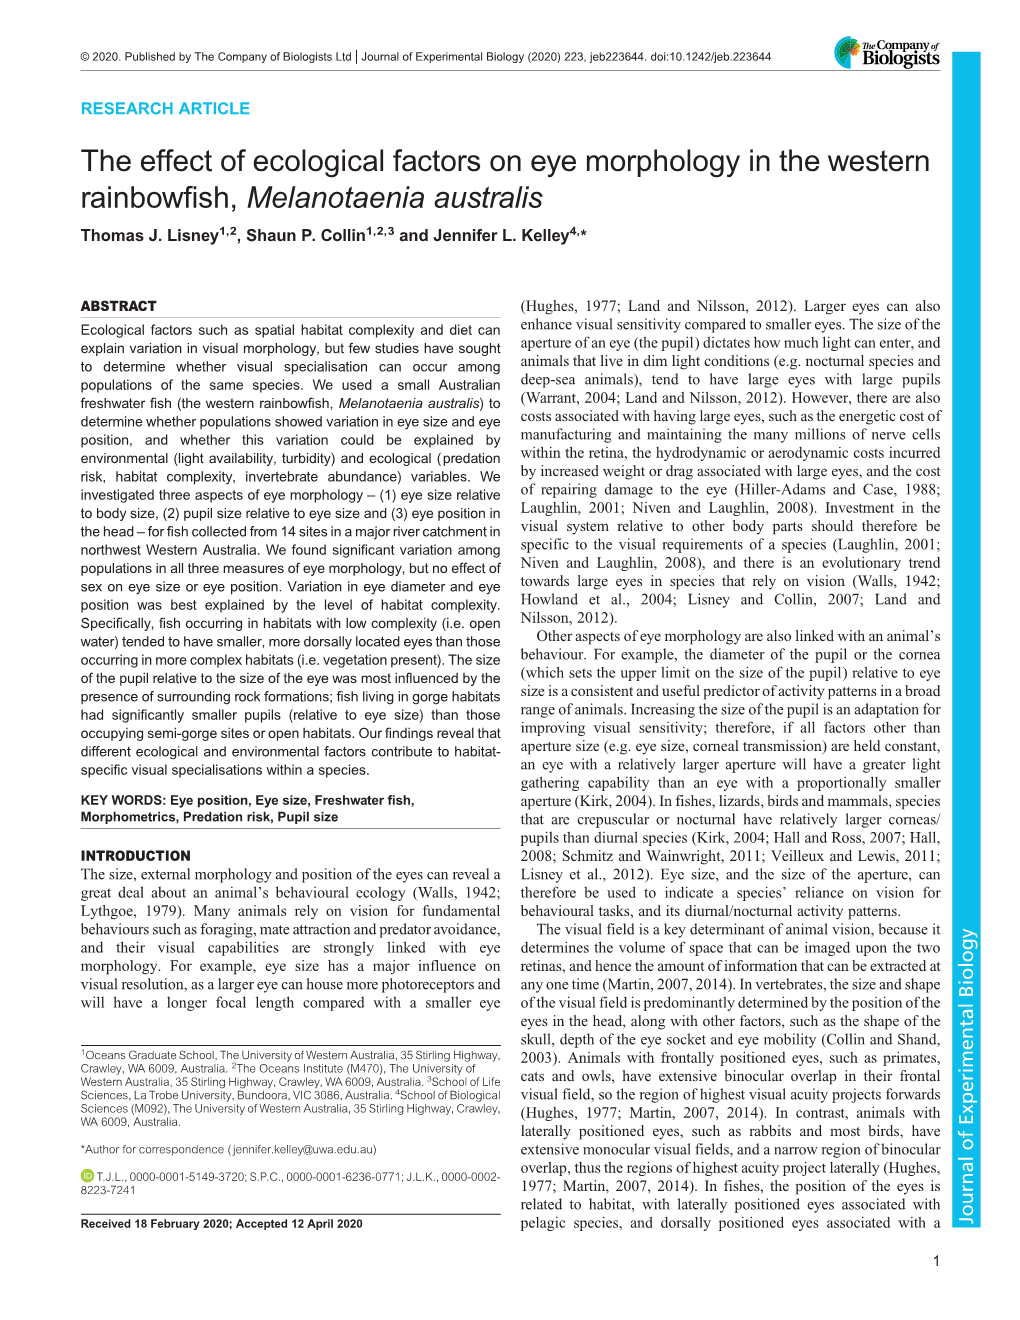 The Effect of Ecological Factors on Eye Morphology in the Western Rainbowfish, Melanotaenia Australis Thomas J